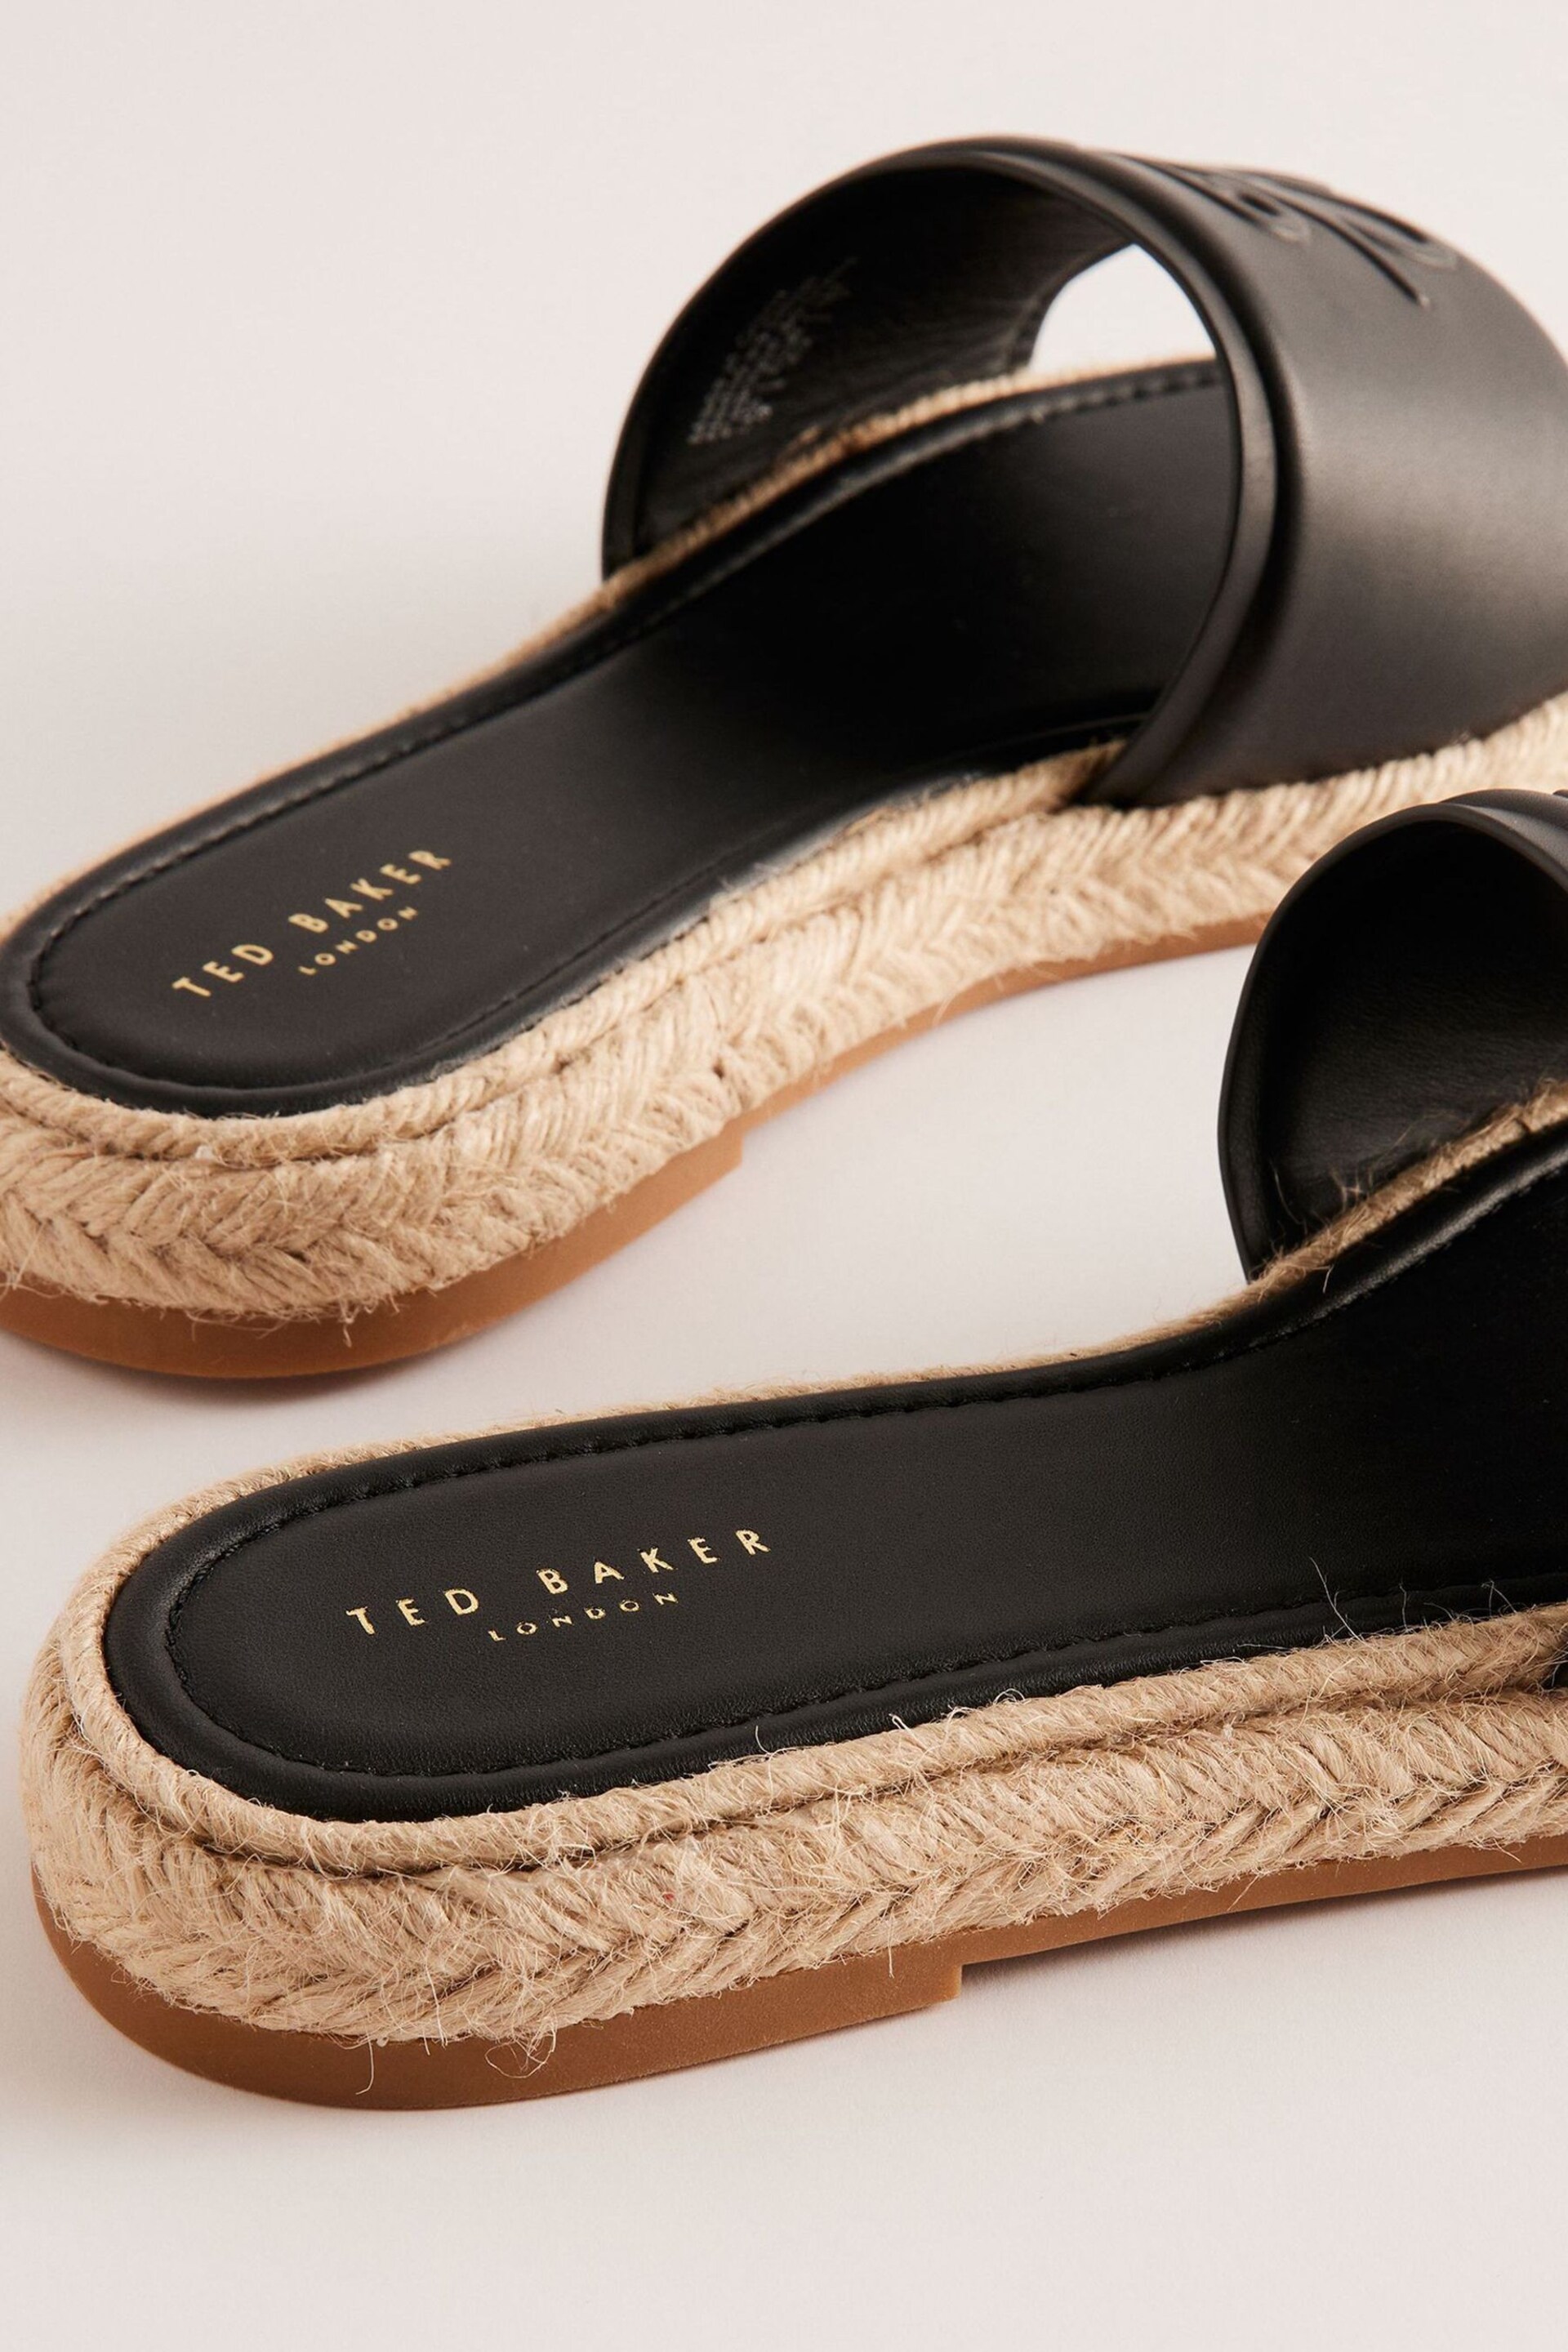 Ted Baker Black Portiya Flat Espadrilles Sandals With Signature Logo - Image 3 of 5